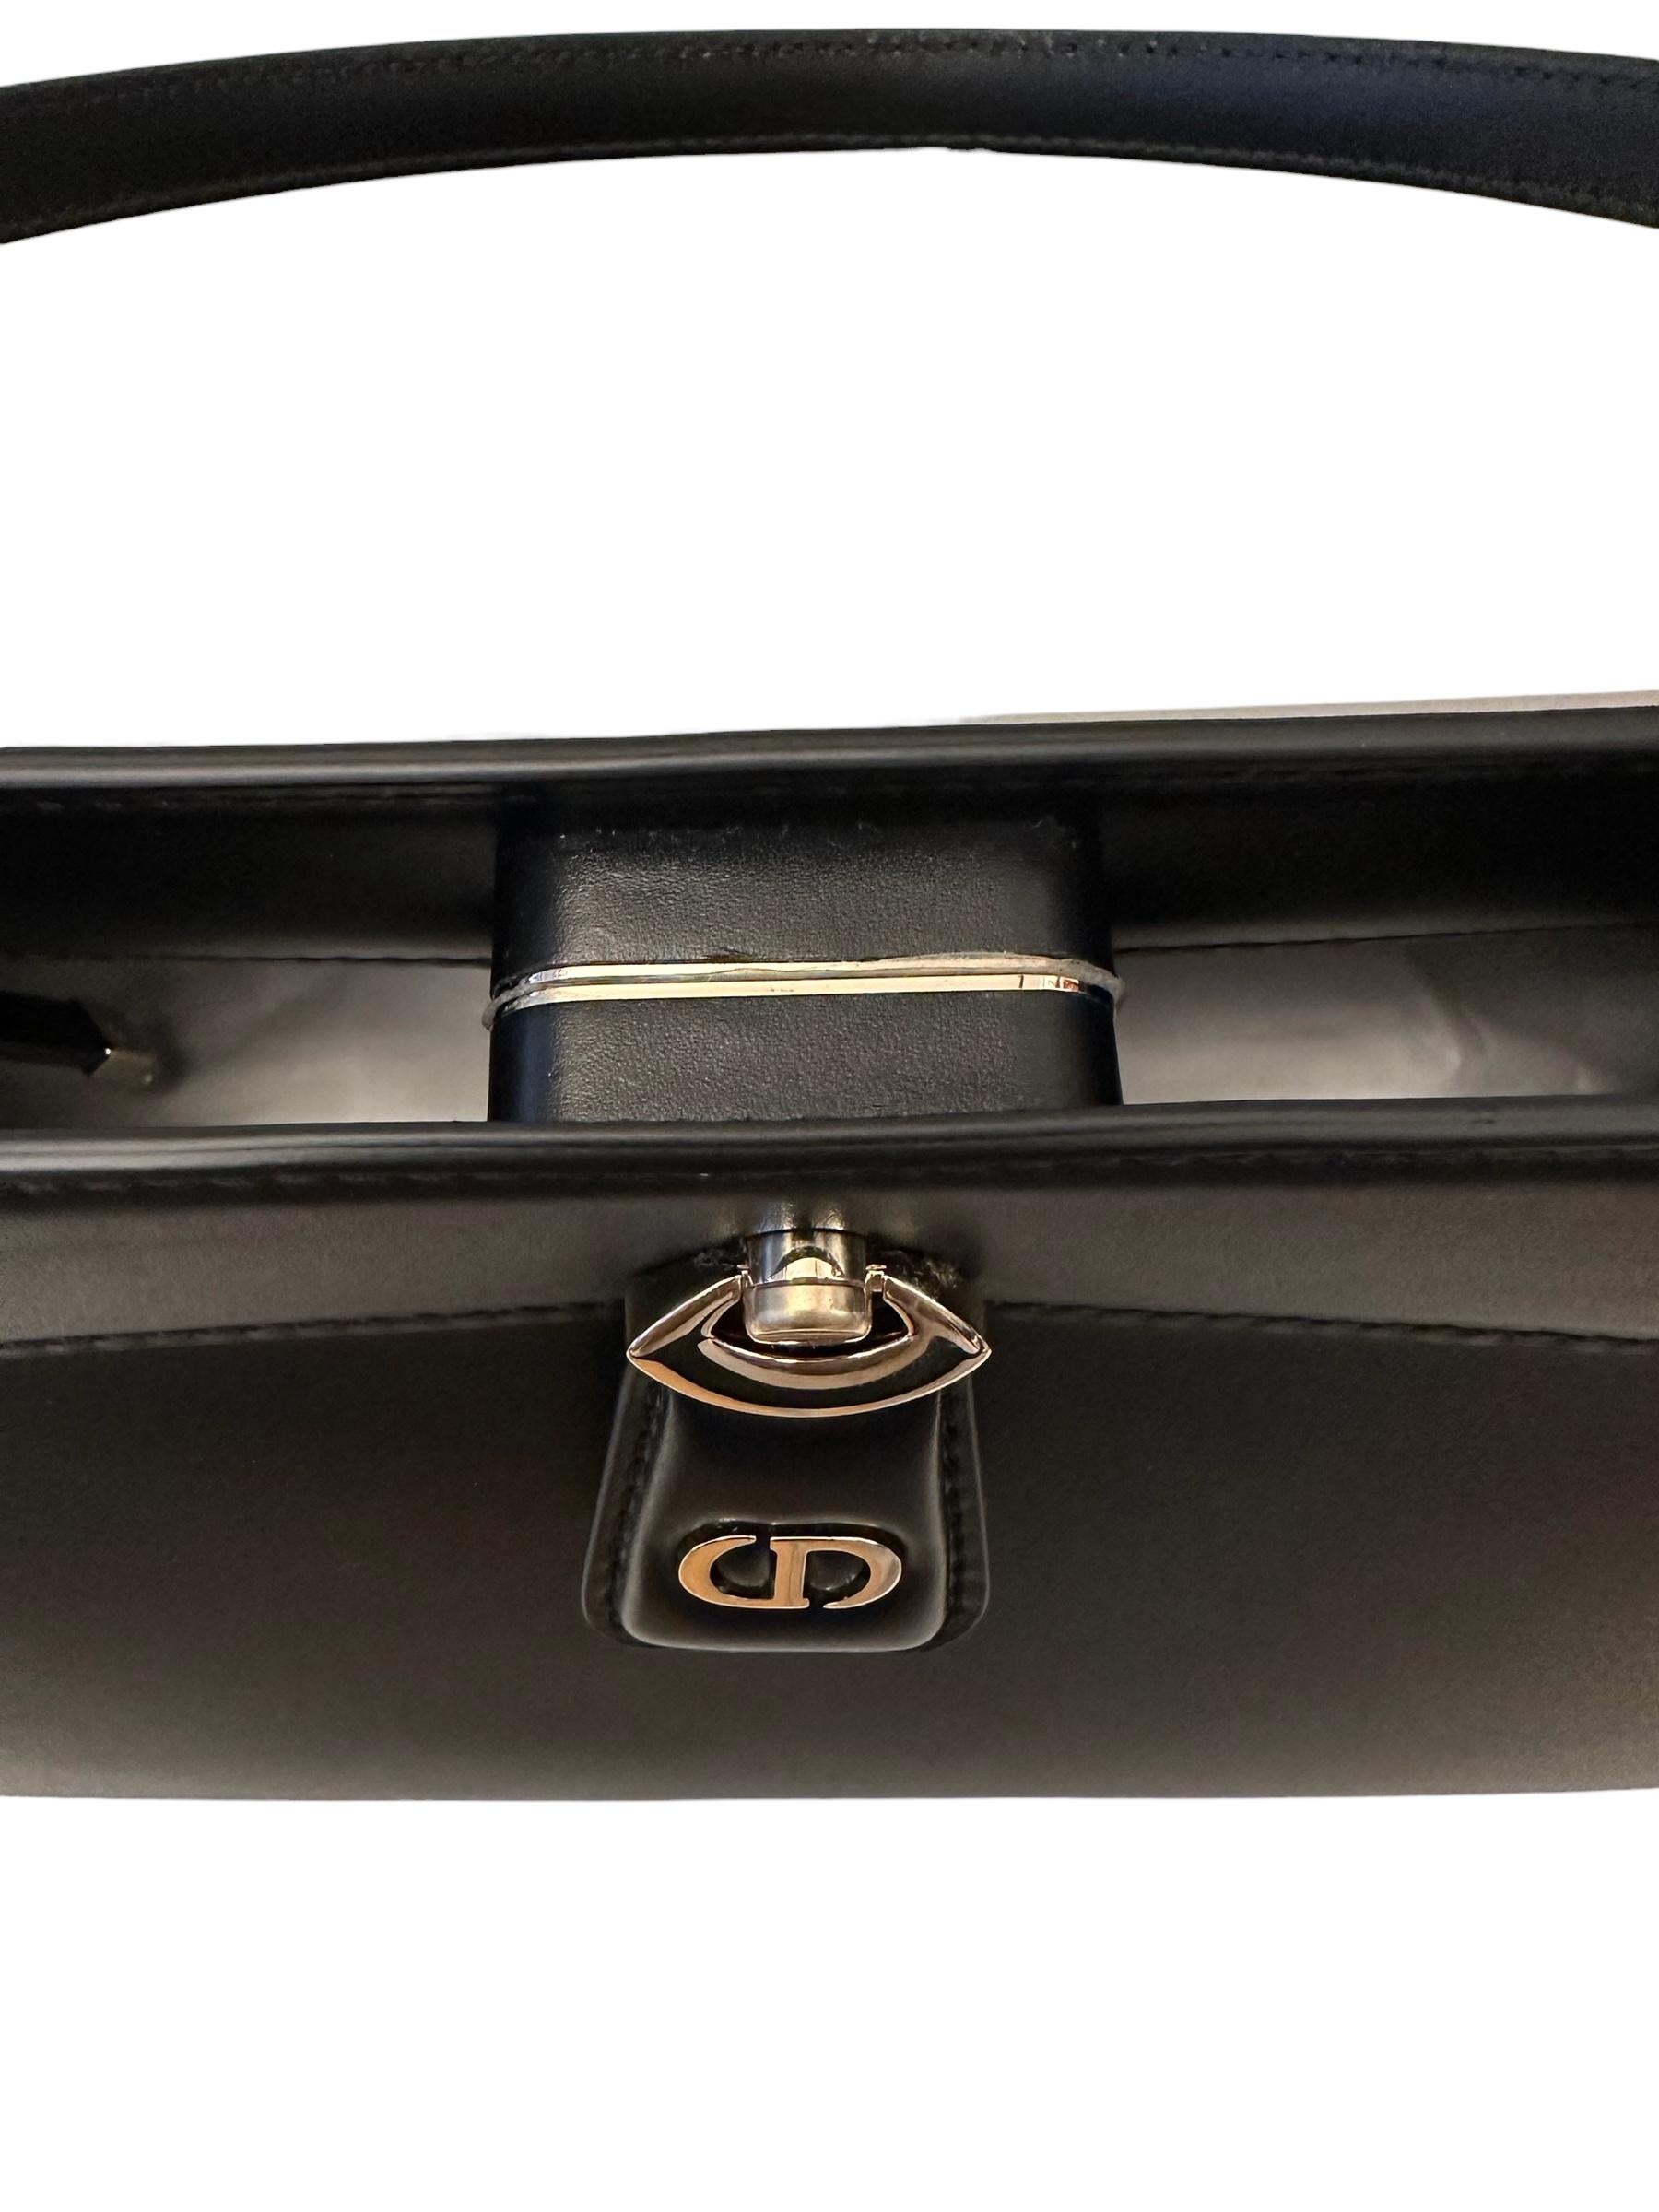 Christian Dior Black Leather Medium Dior Key Bag For Sale 8